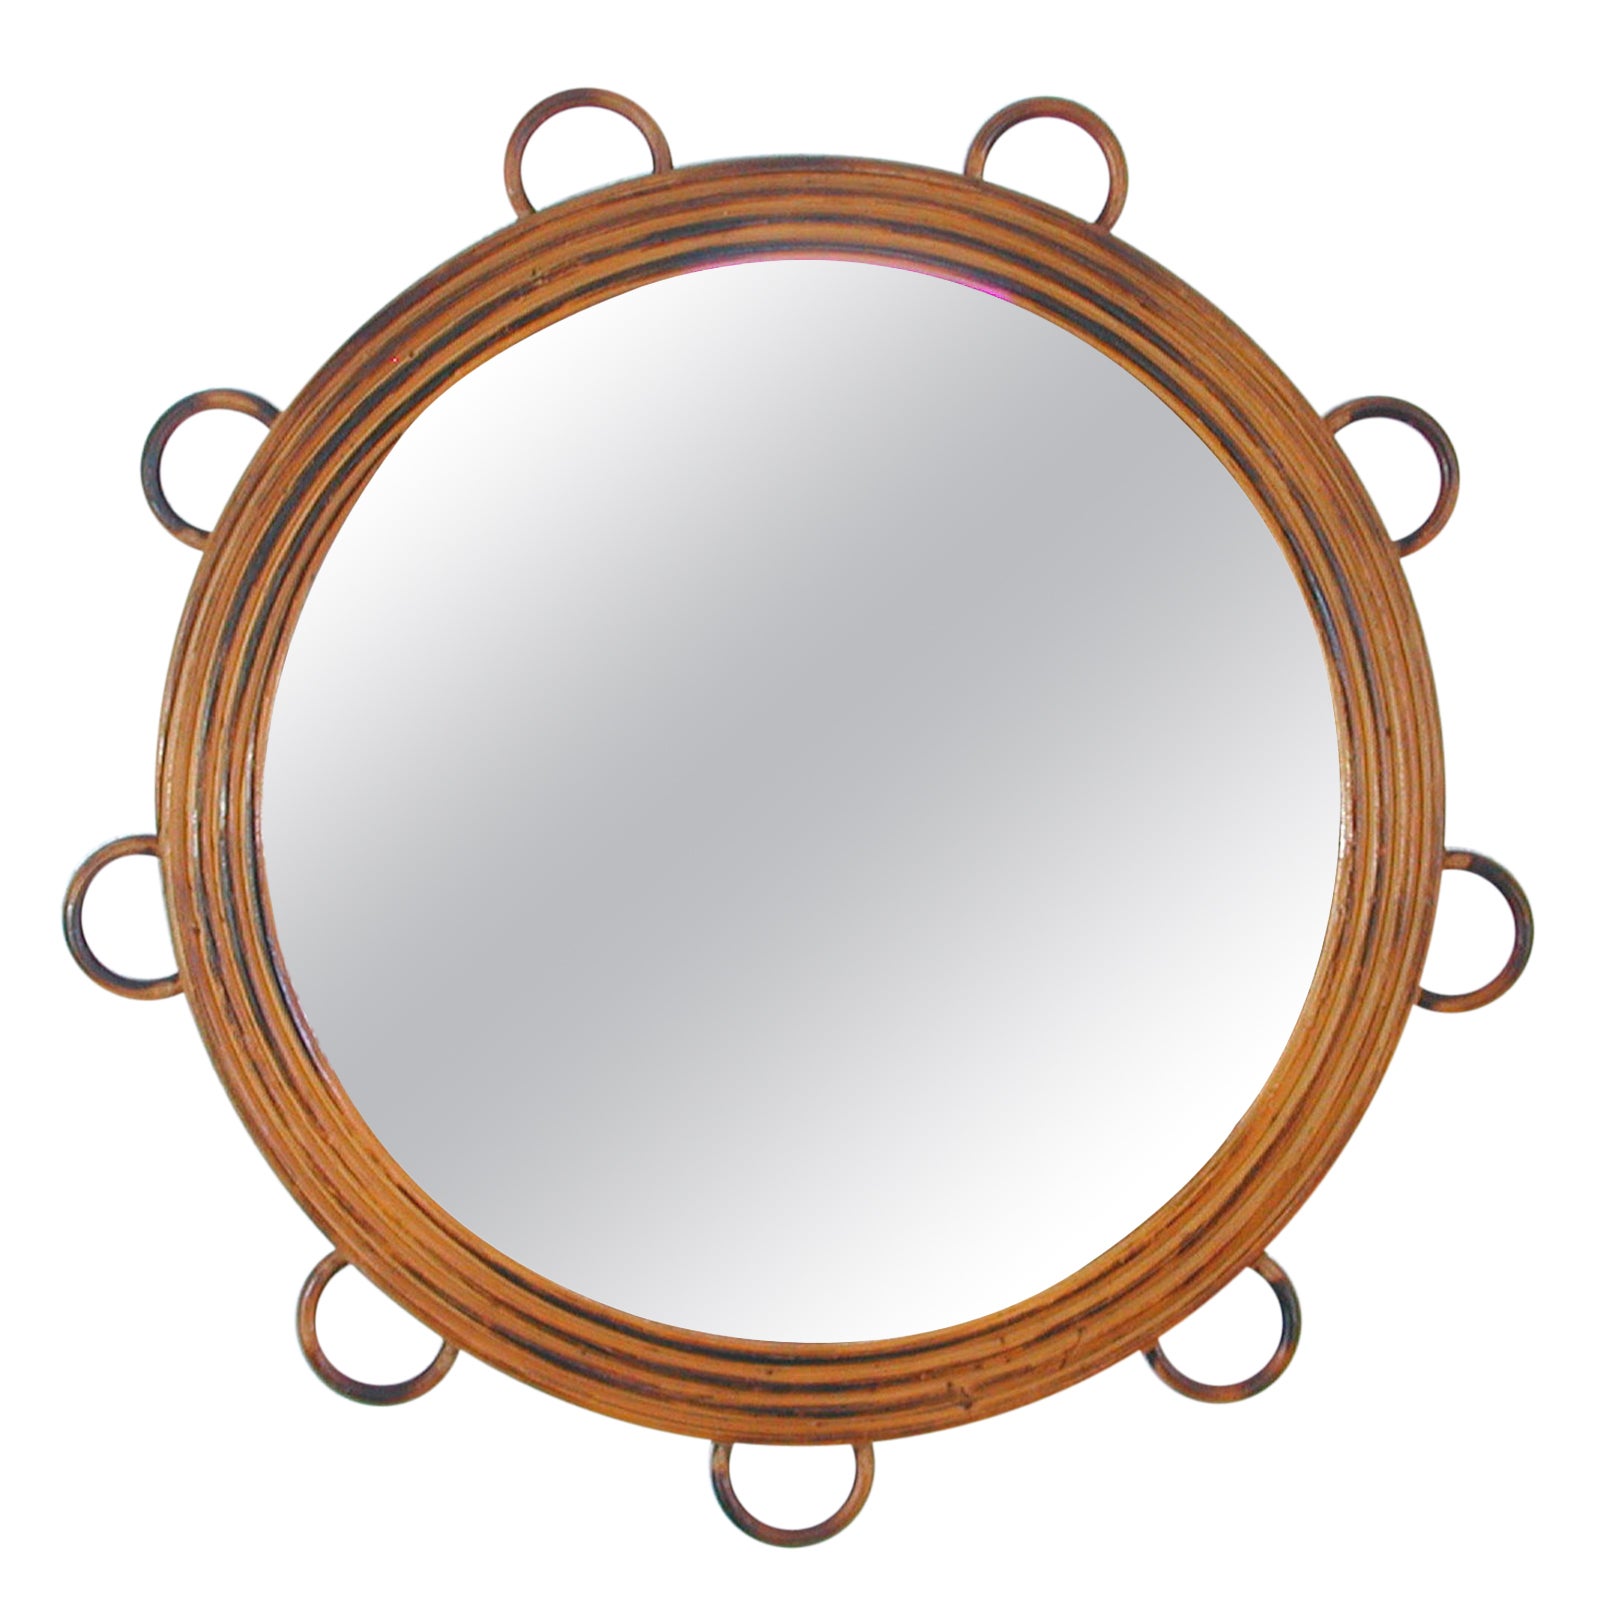 Italian Franco Albini Style Rattan Wall Mirror, 1950s For Sale